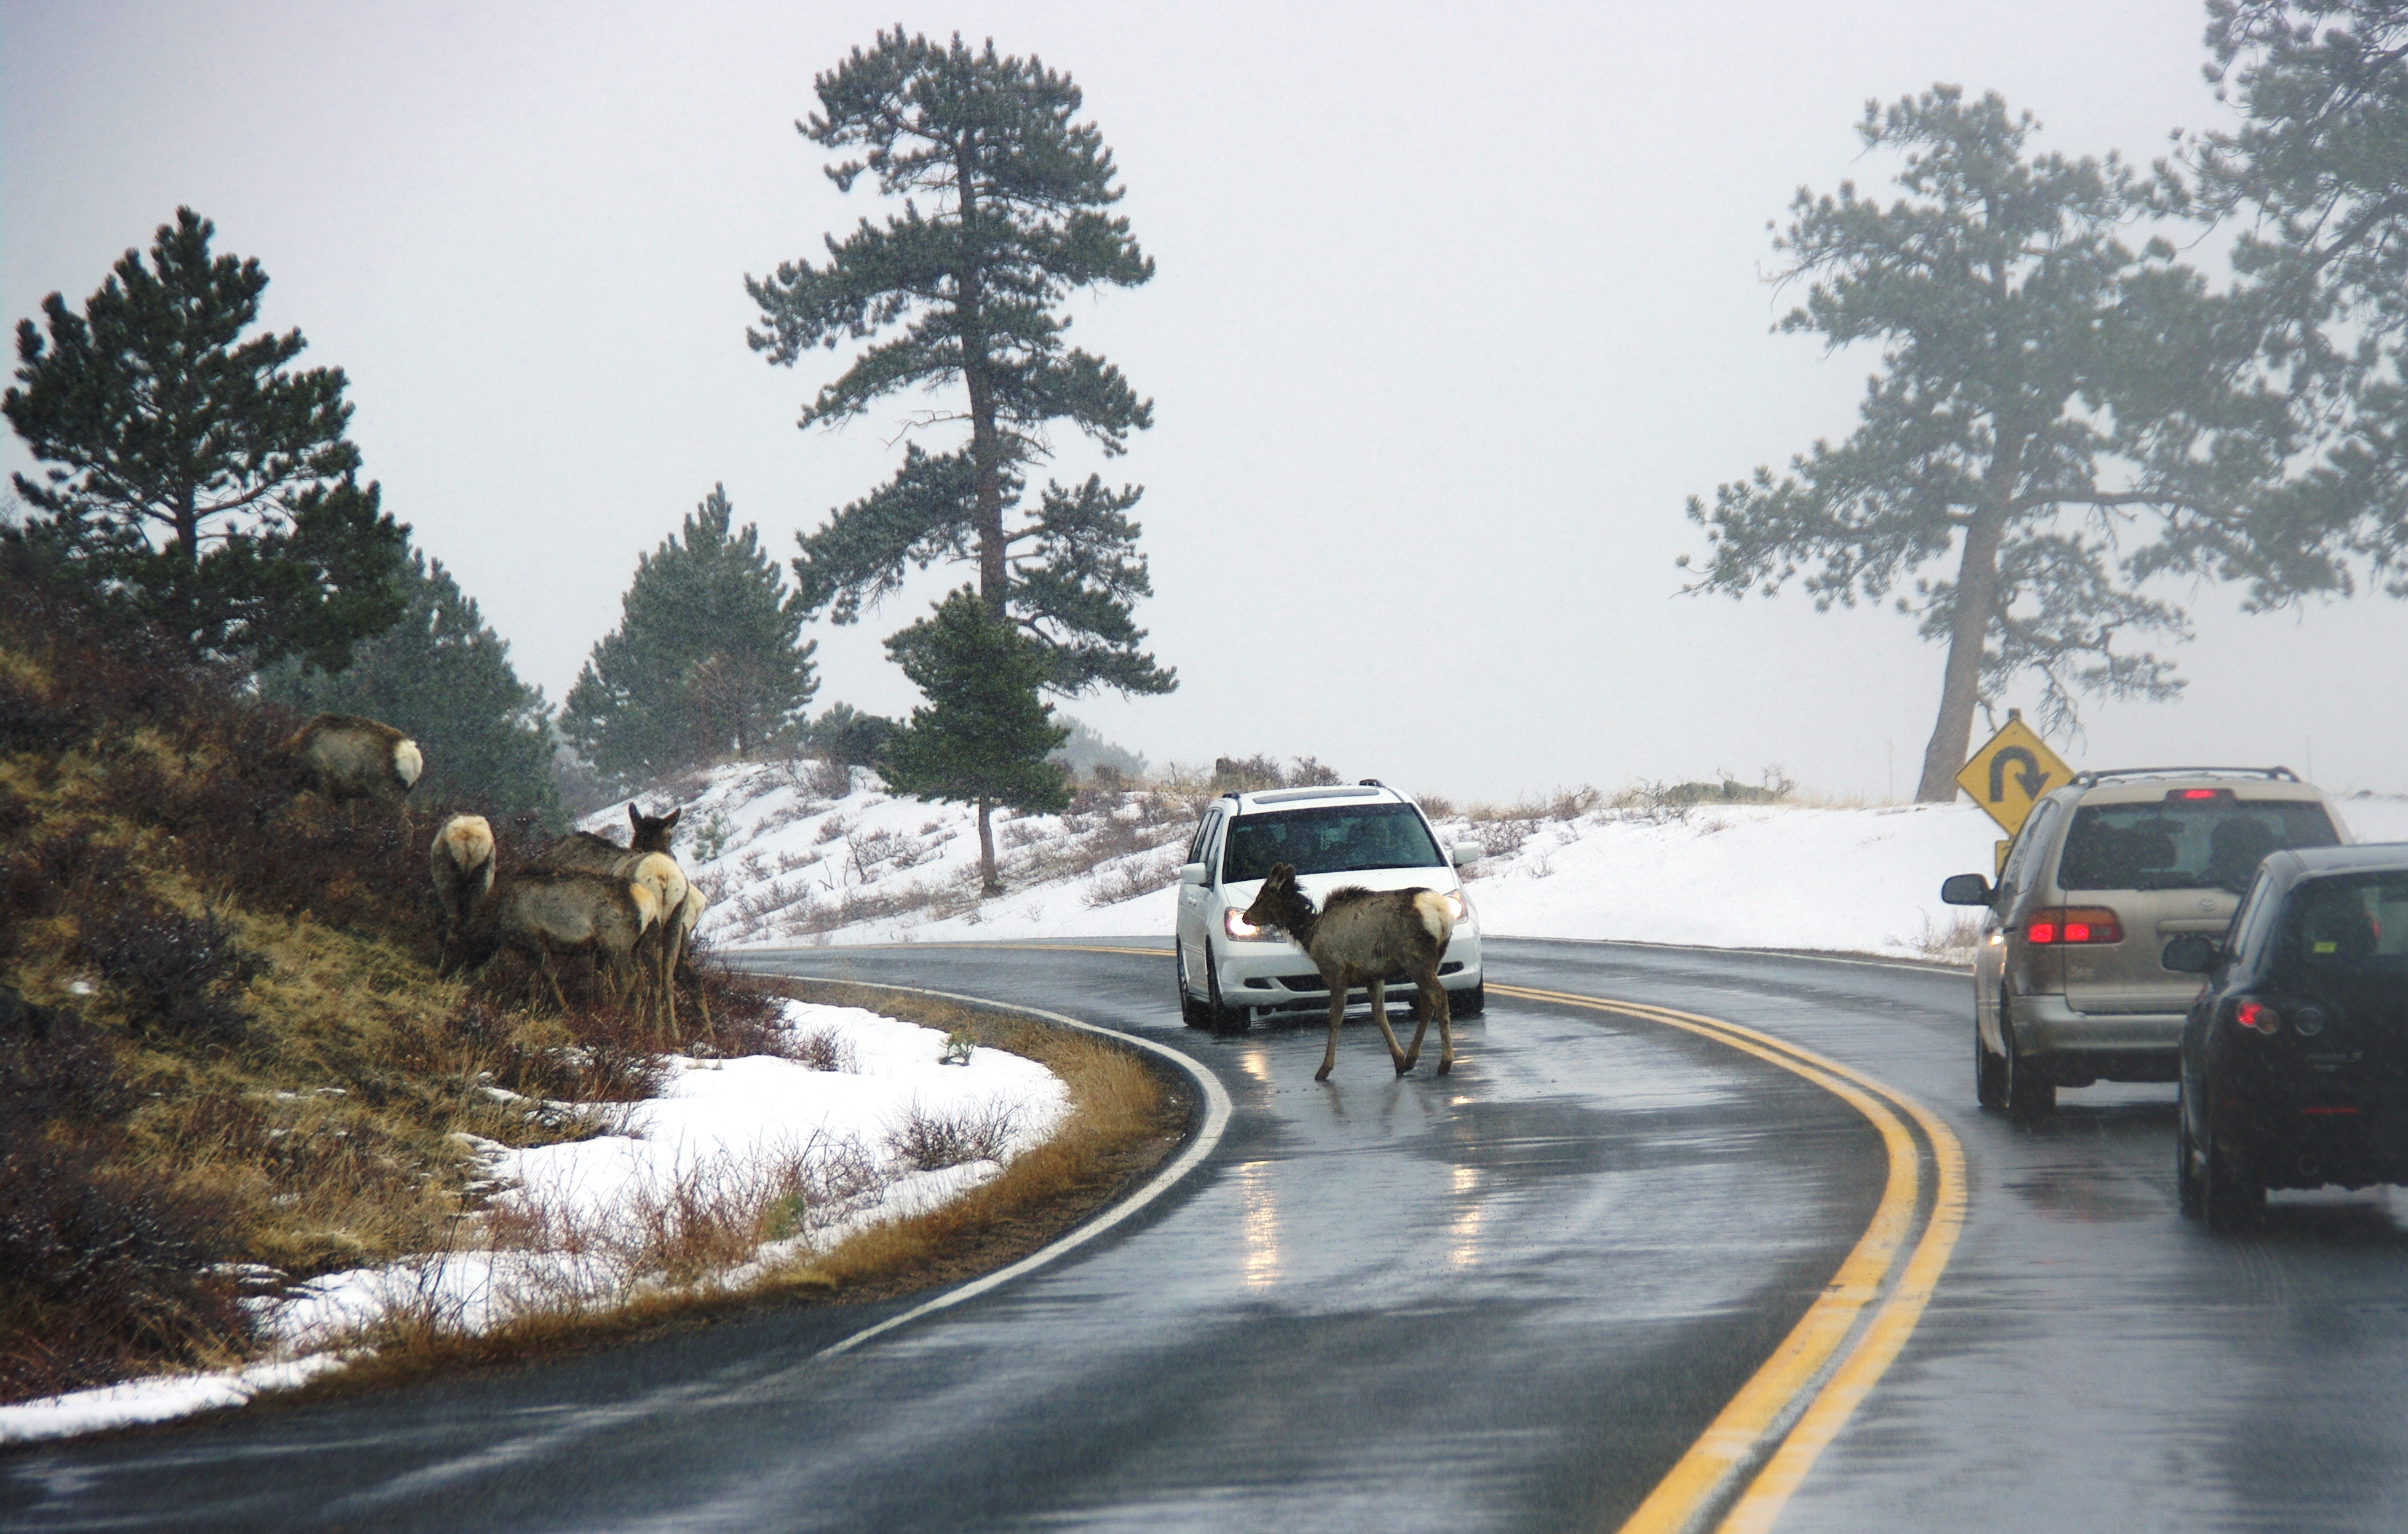 elk in traffic crossing a highway in snow March 2010